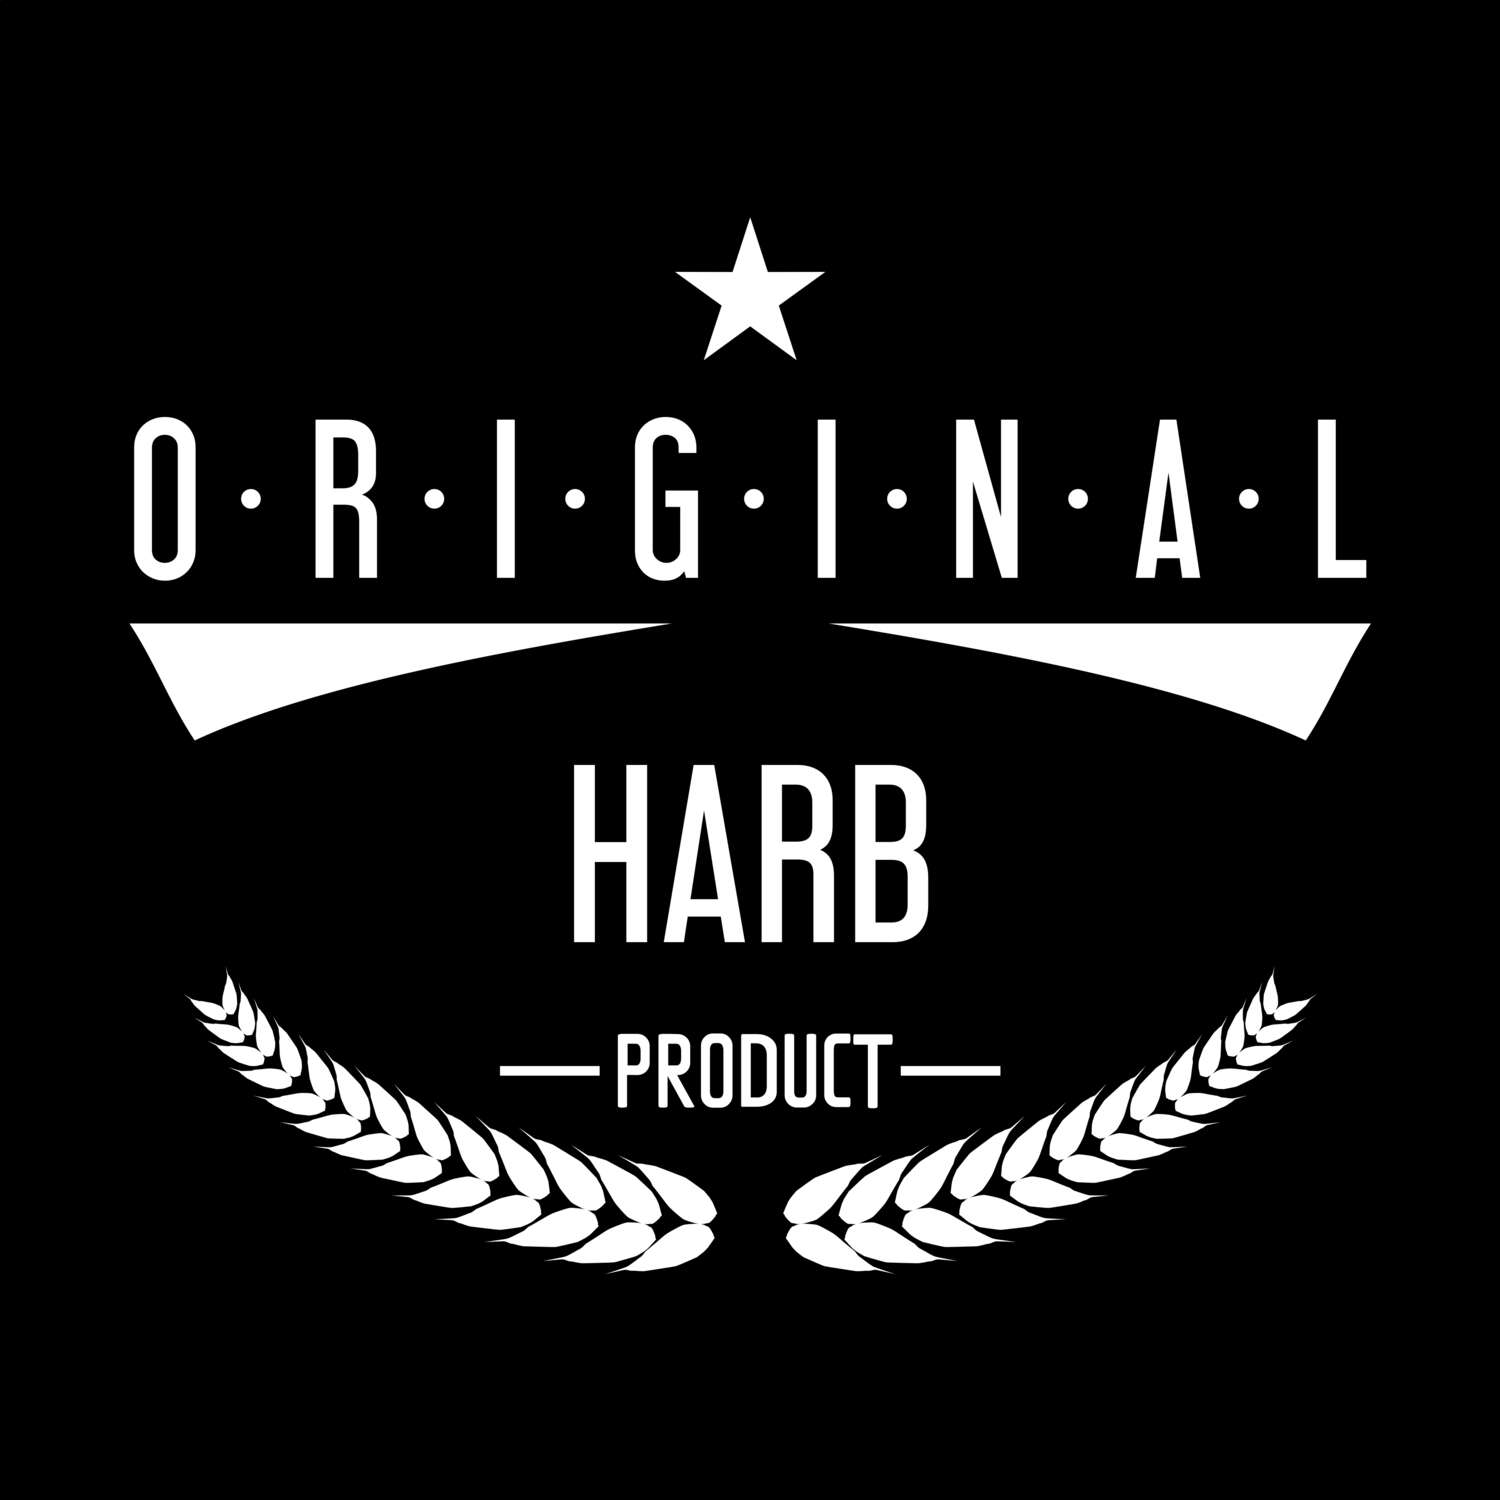 Harb T-Shirt »Original Product«